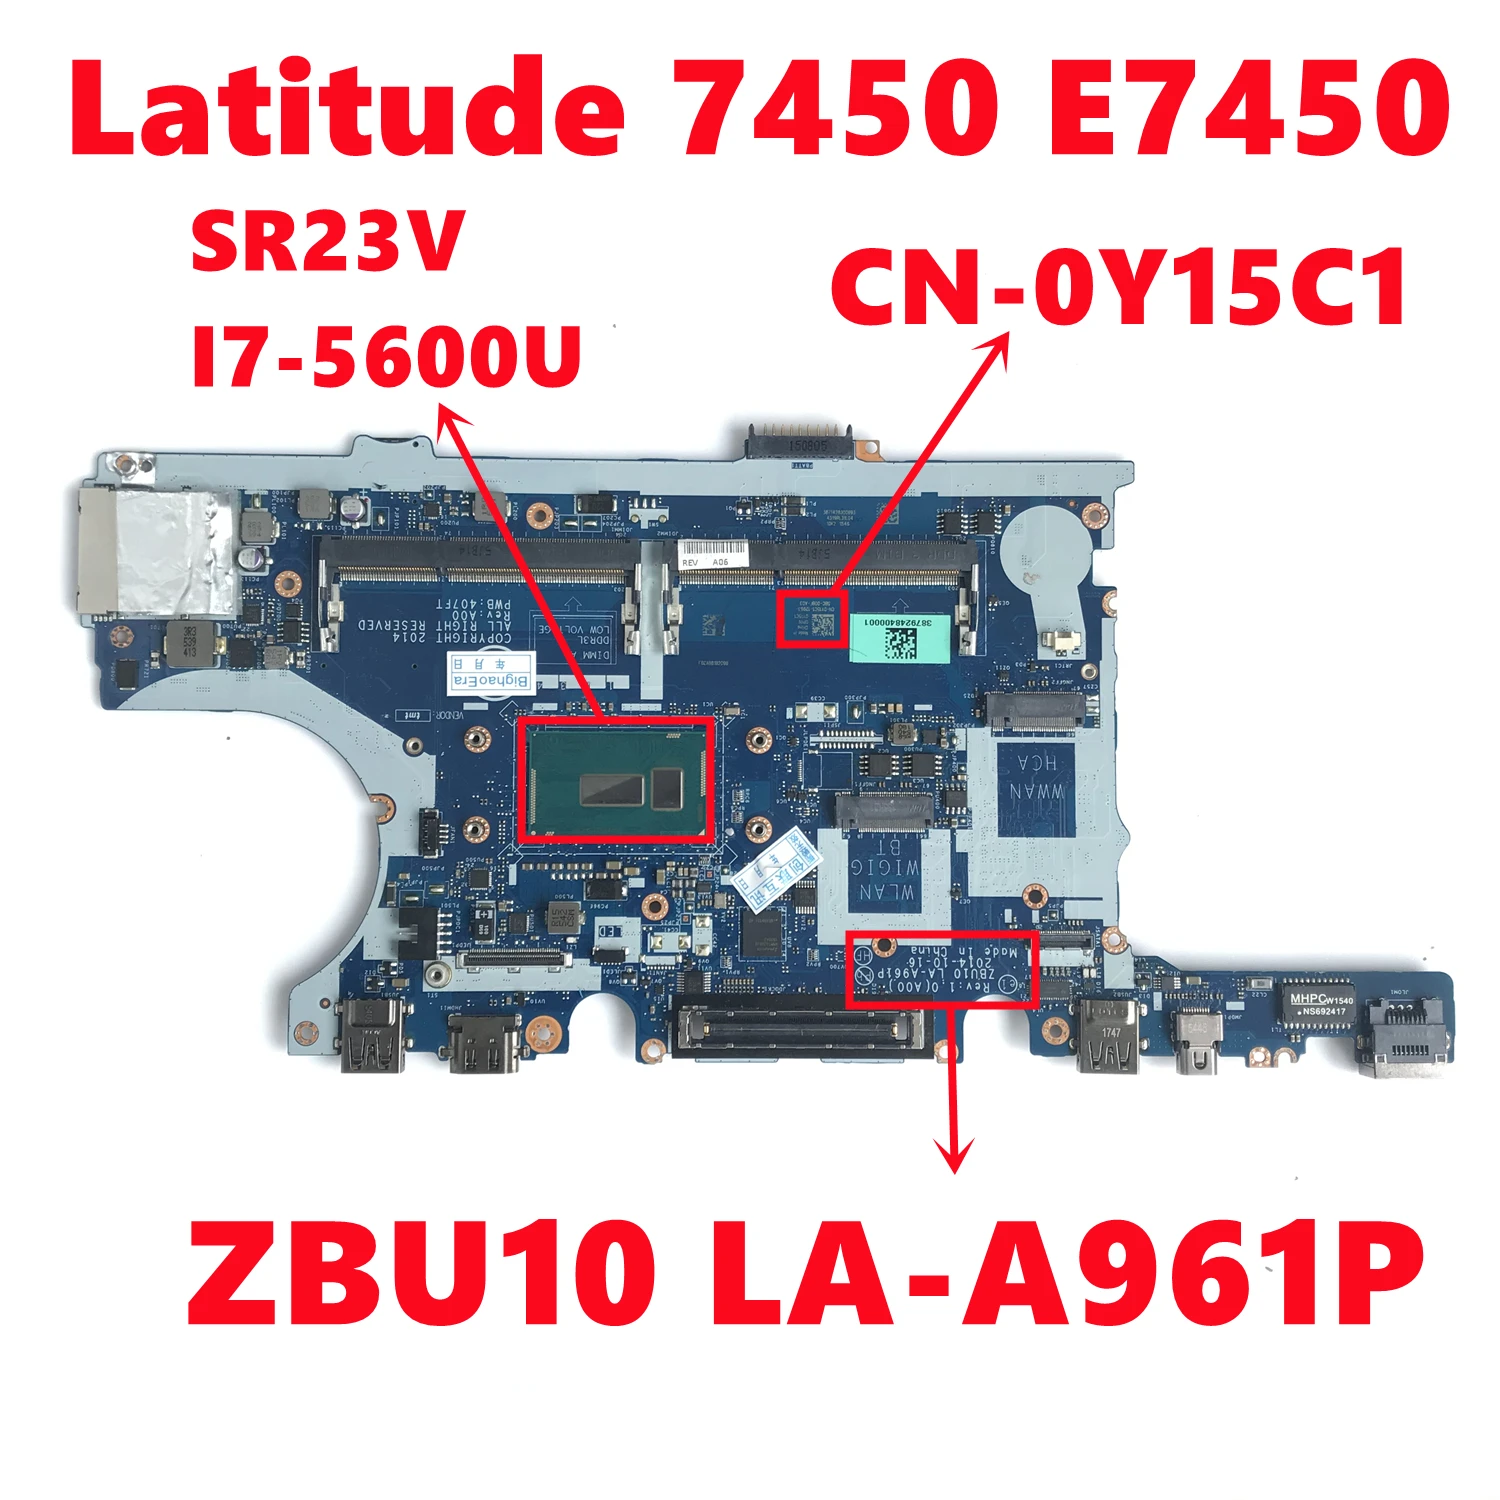 CN-0Y15C1 0Y15C1 Y15C1 For dell Latitude 7450 E7450 Laptop Motherboard ZBU10 LA-A961P Mainboard With SR23V I7-5600U 100% test OK